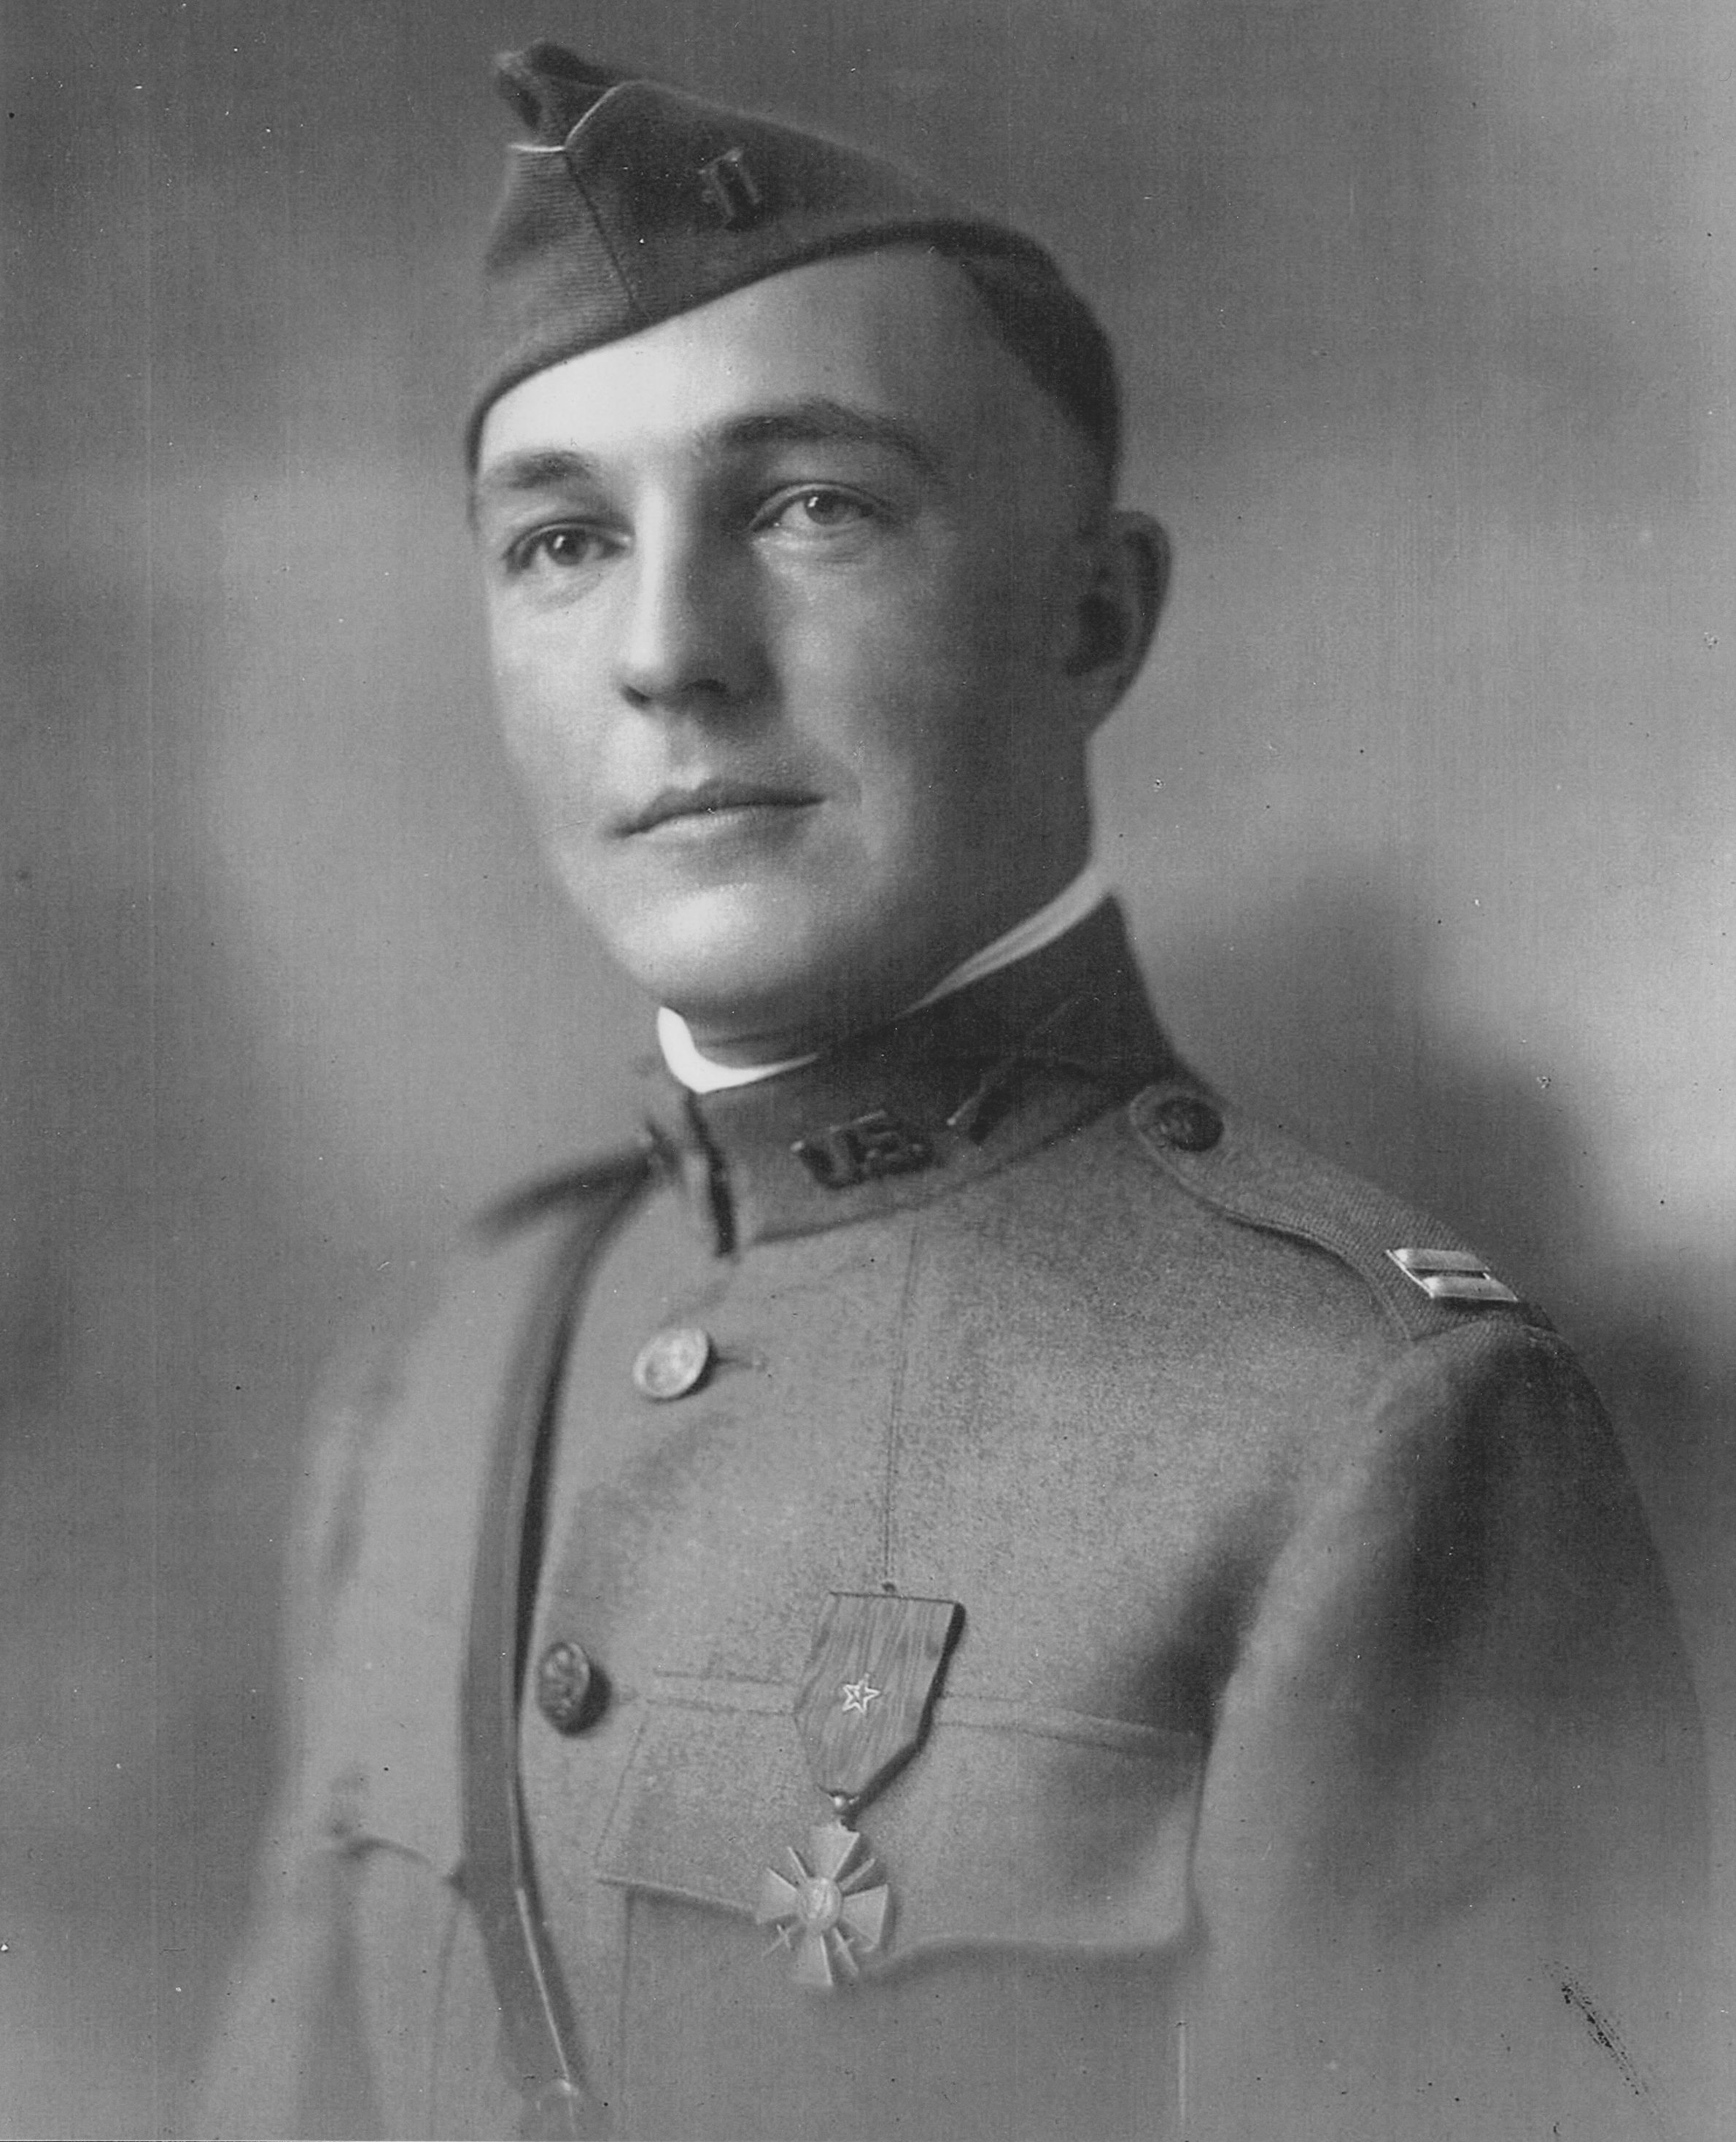 Lt J. R. Conway